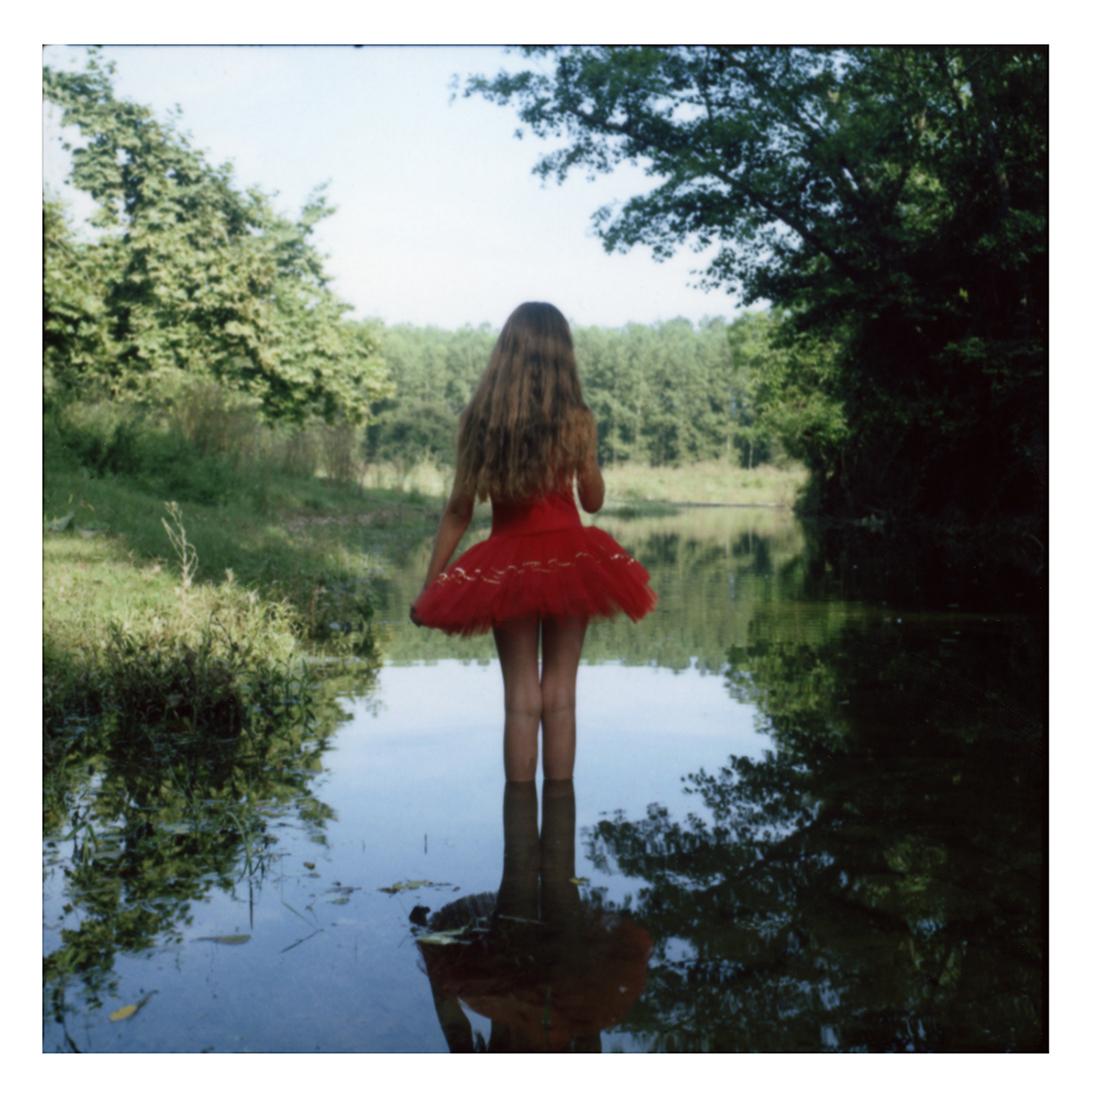 Gaby at dix - Contemporain, Polaroid, Photographie, enfance. XXIe siècle